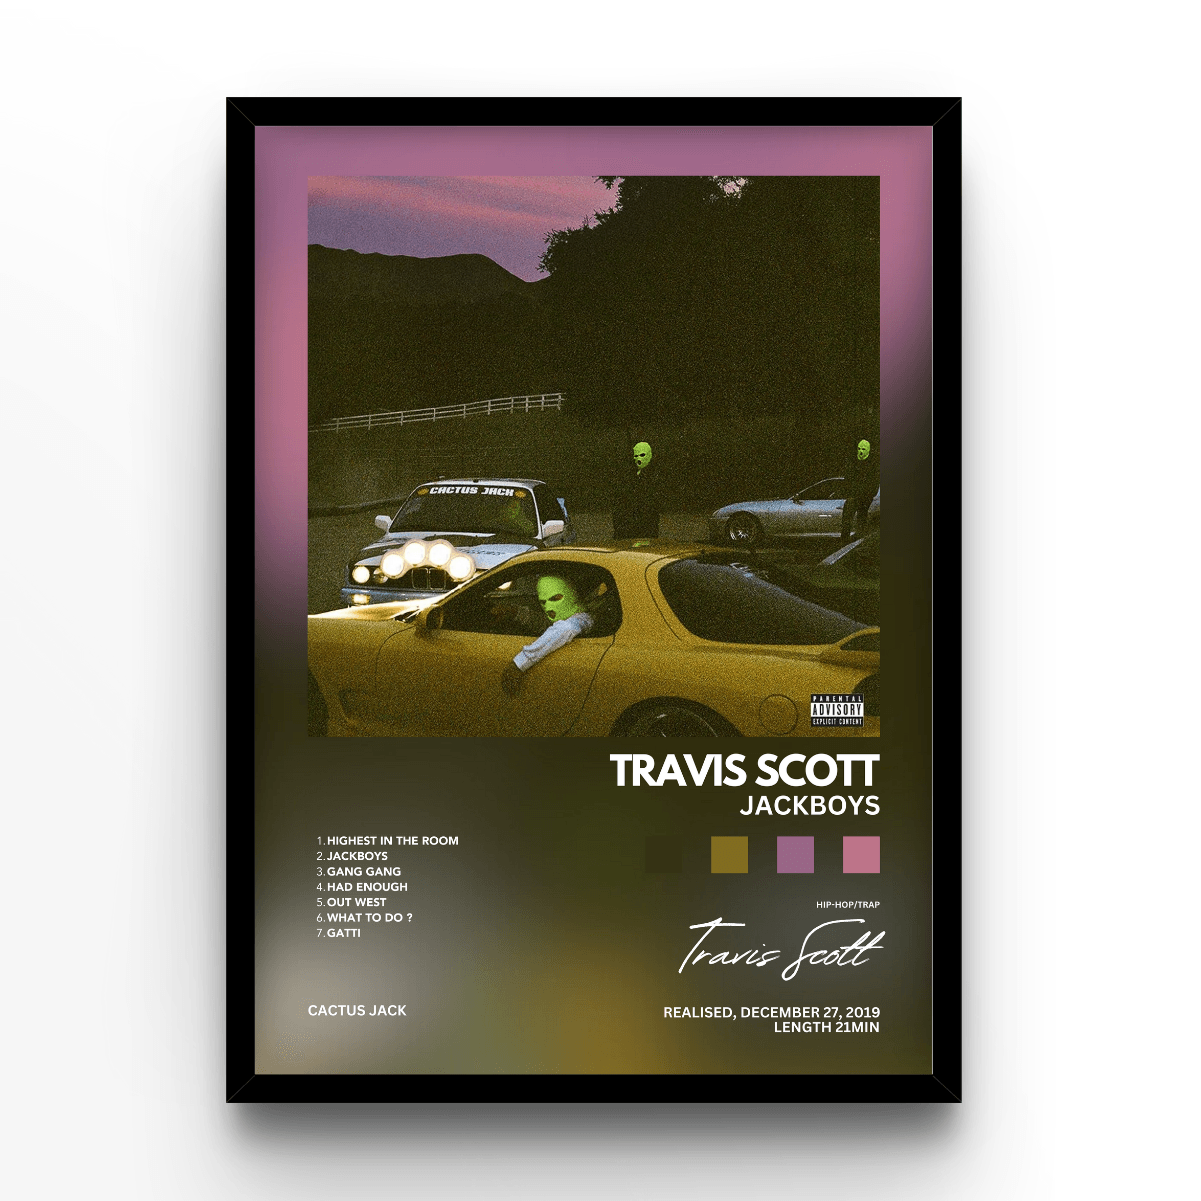 Jackboys Album Travis Scott - A4, A3, A2 Posters Base - Poster Print Shop / Art Prints / PostersBase